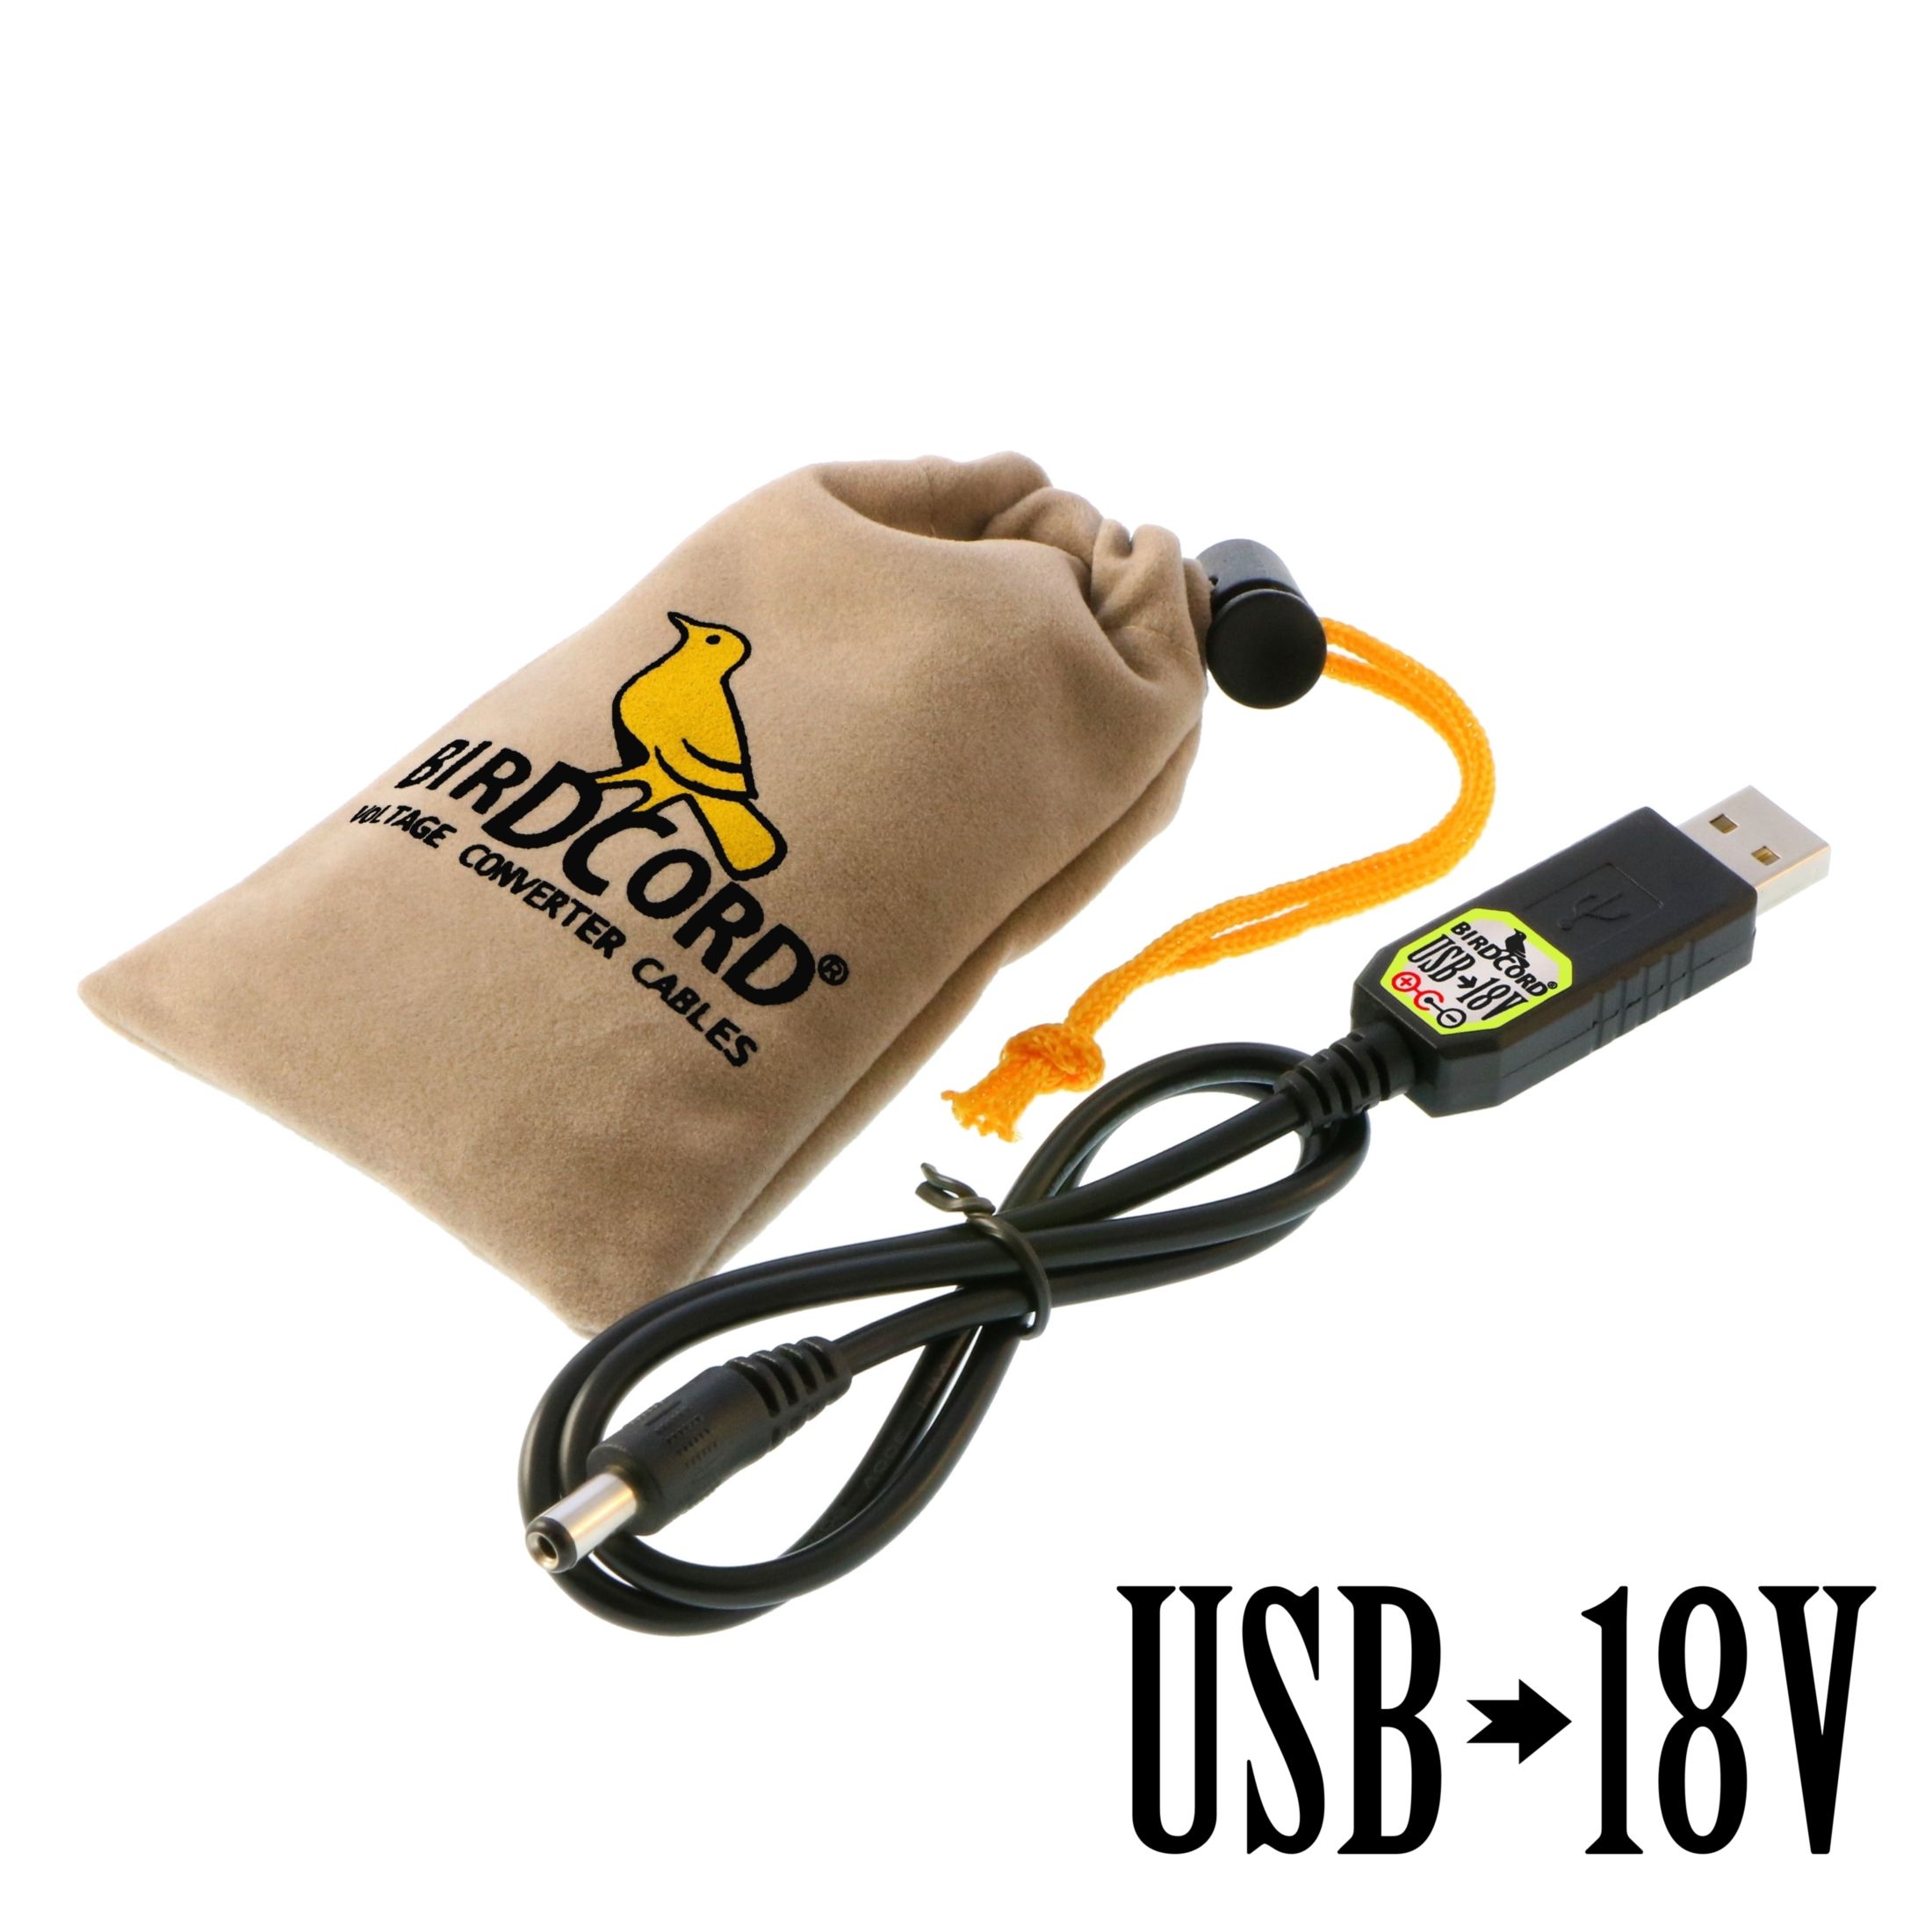 Birdcord USB to 18V Converter Cable